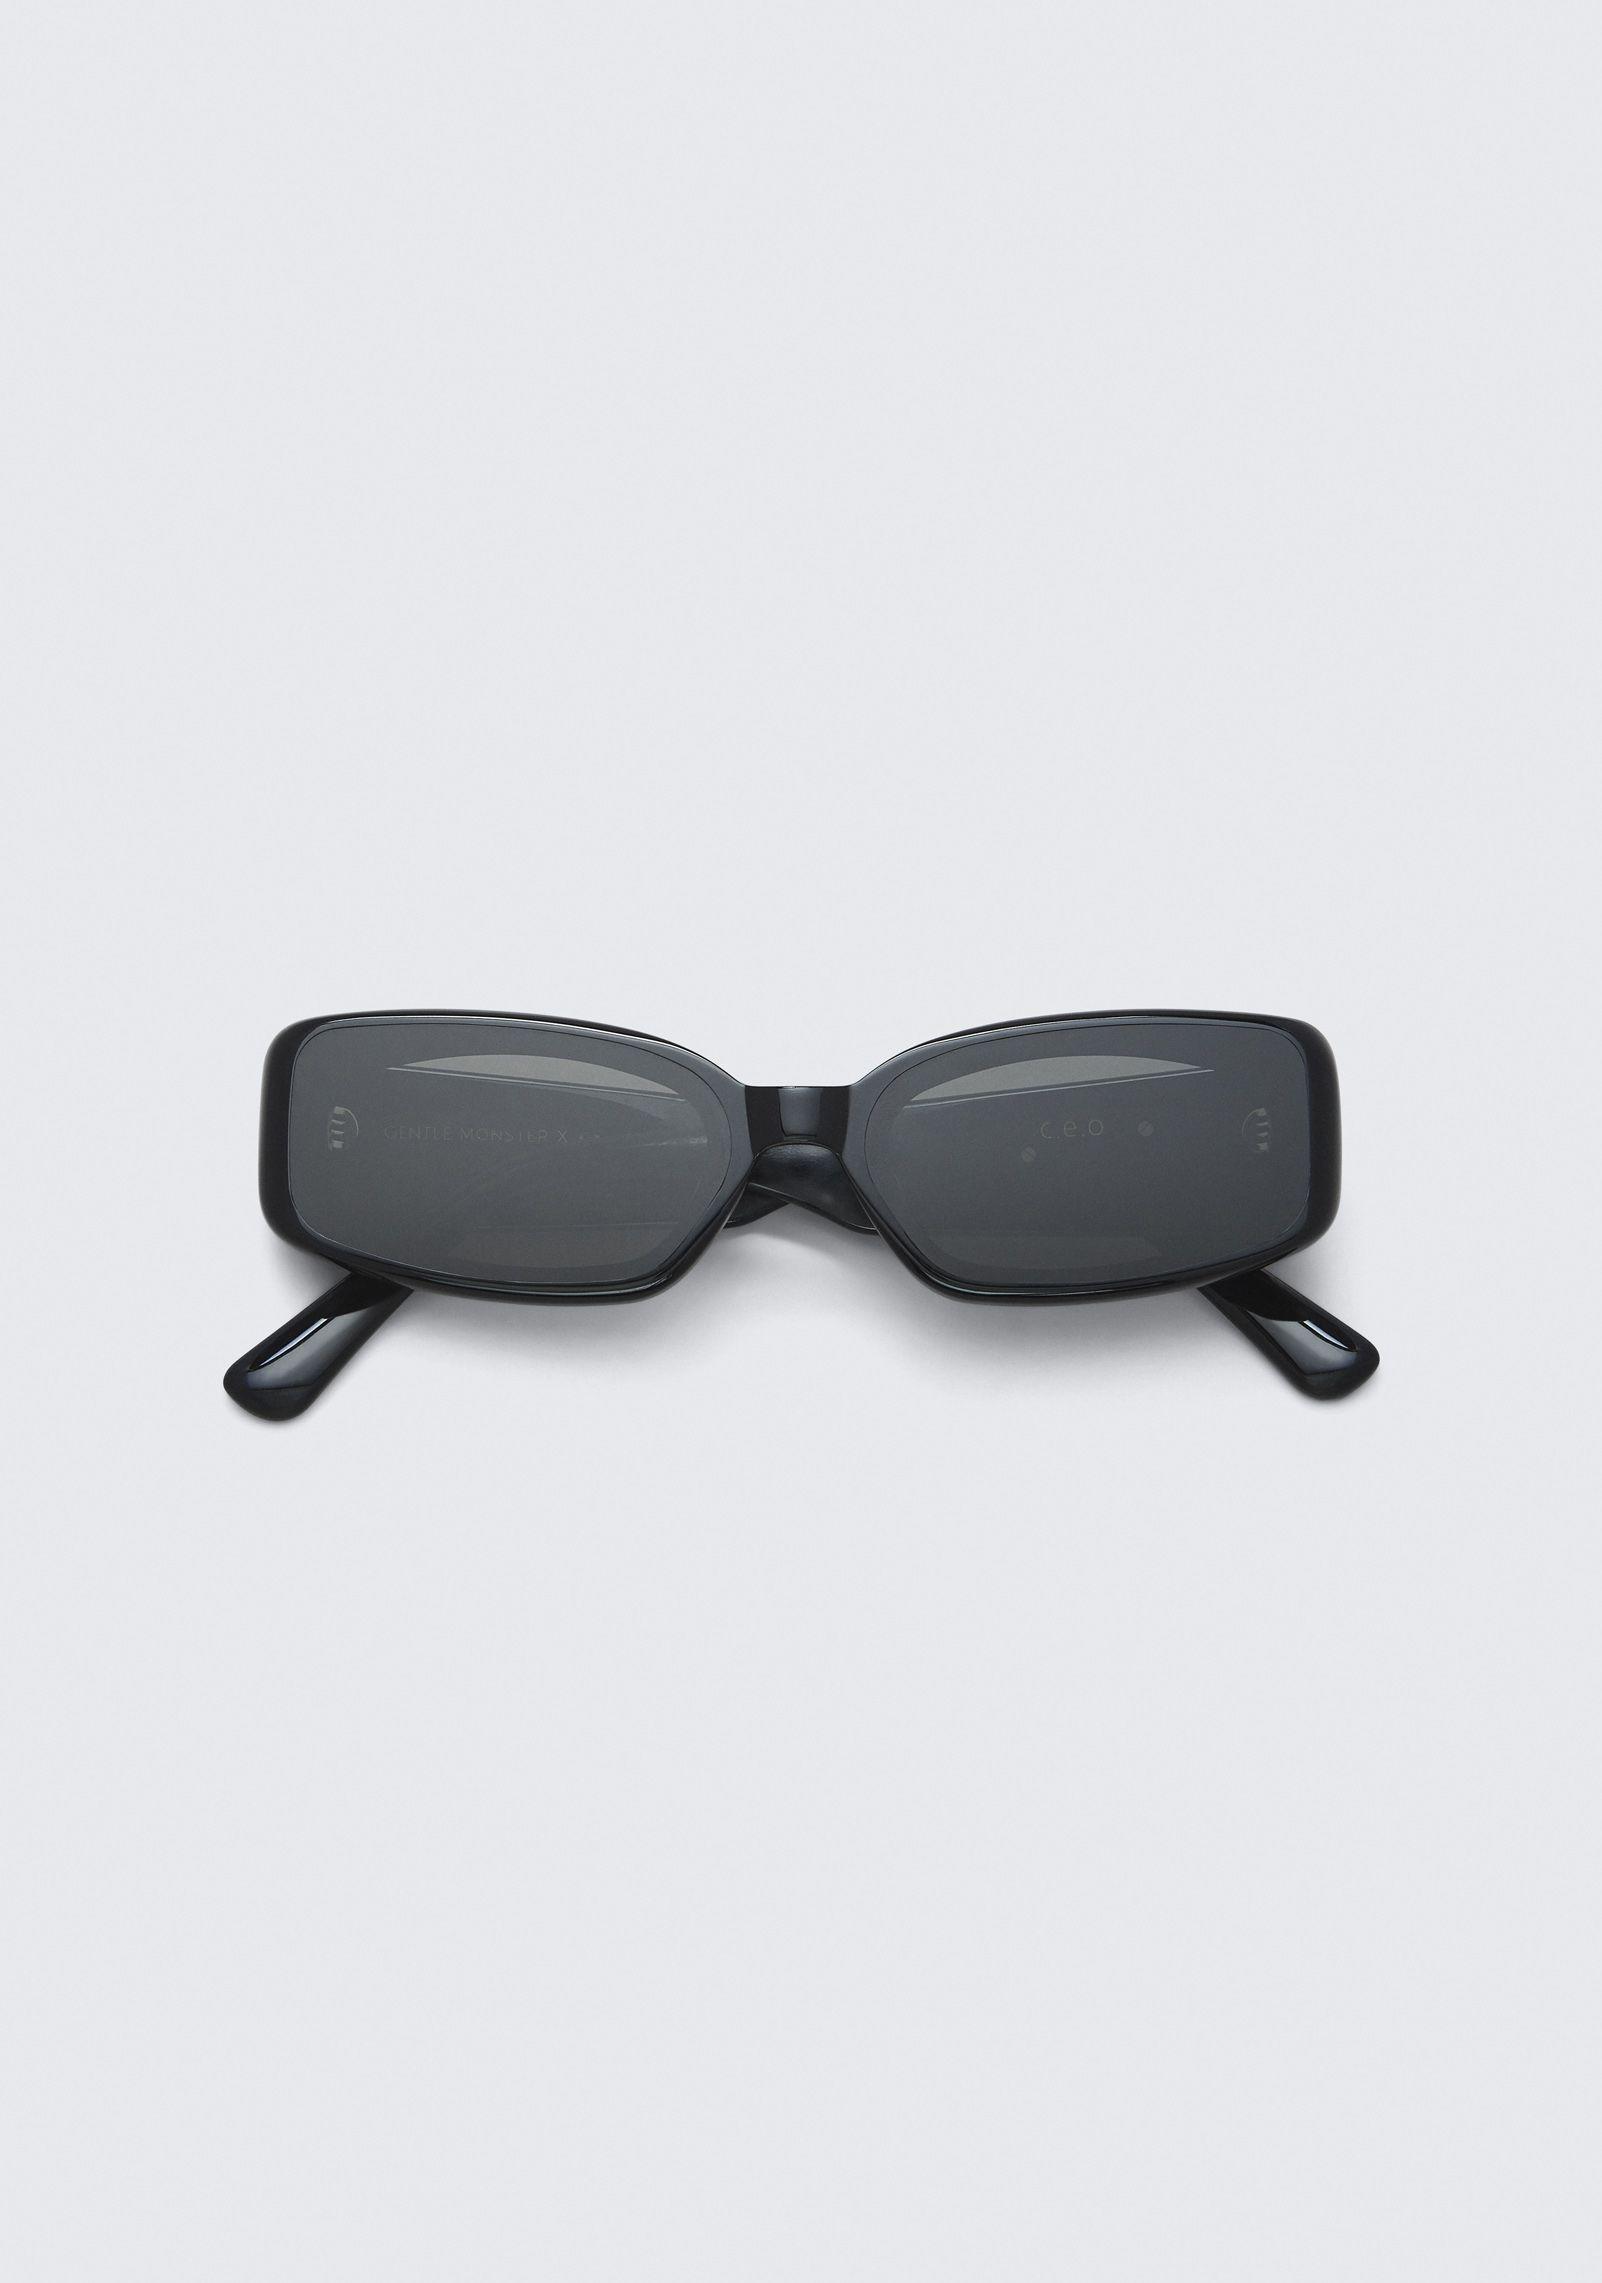 Alexander Wang Ceo Sunglasses in Black - Lyst